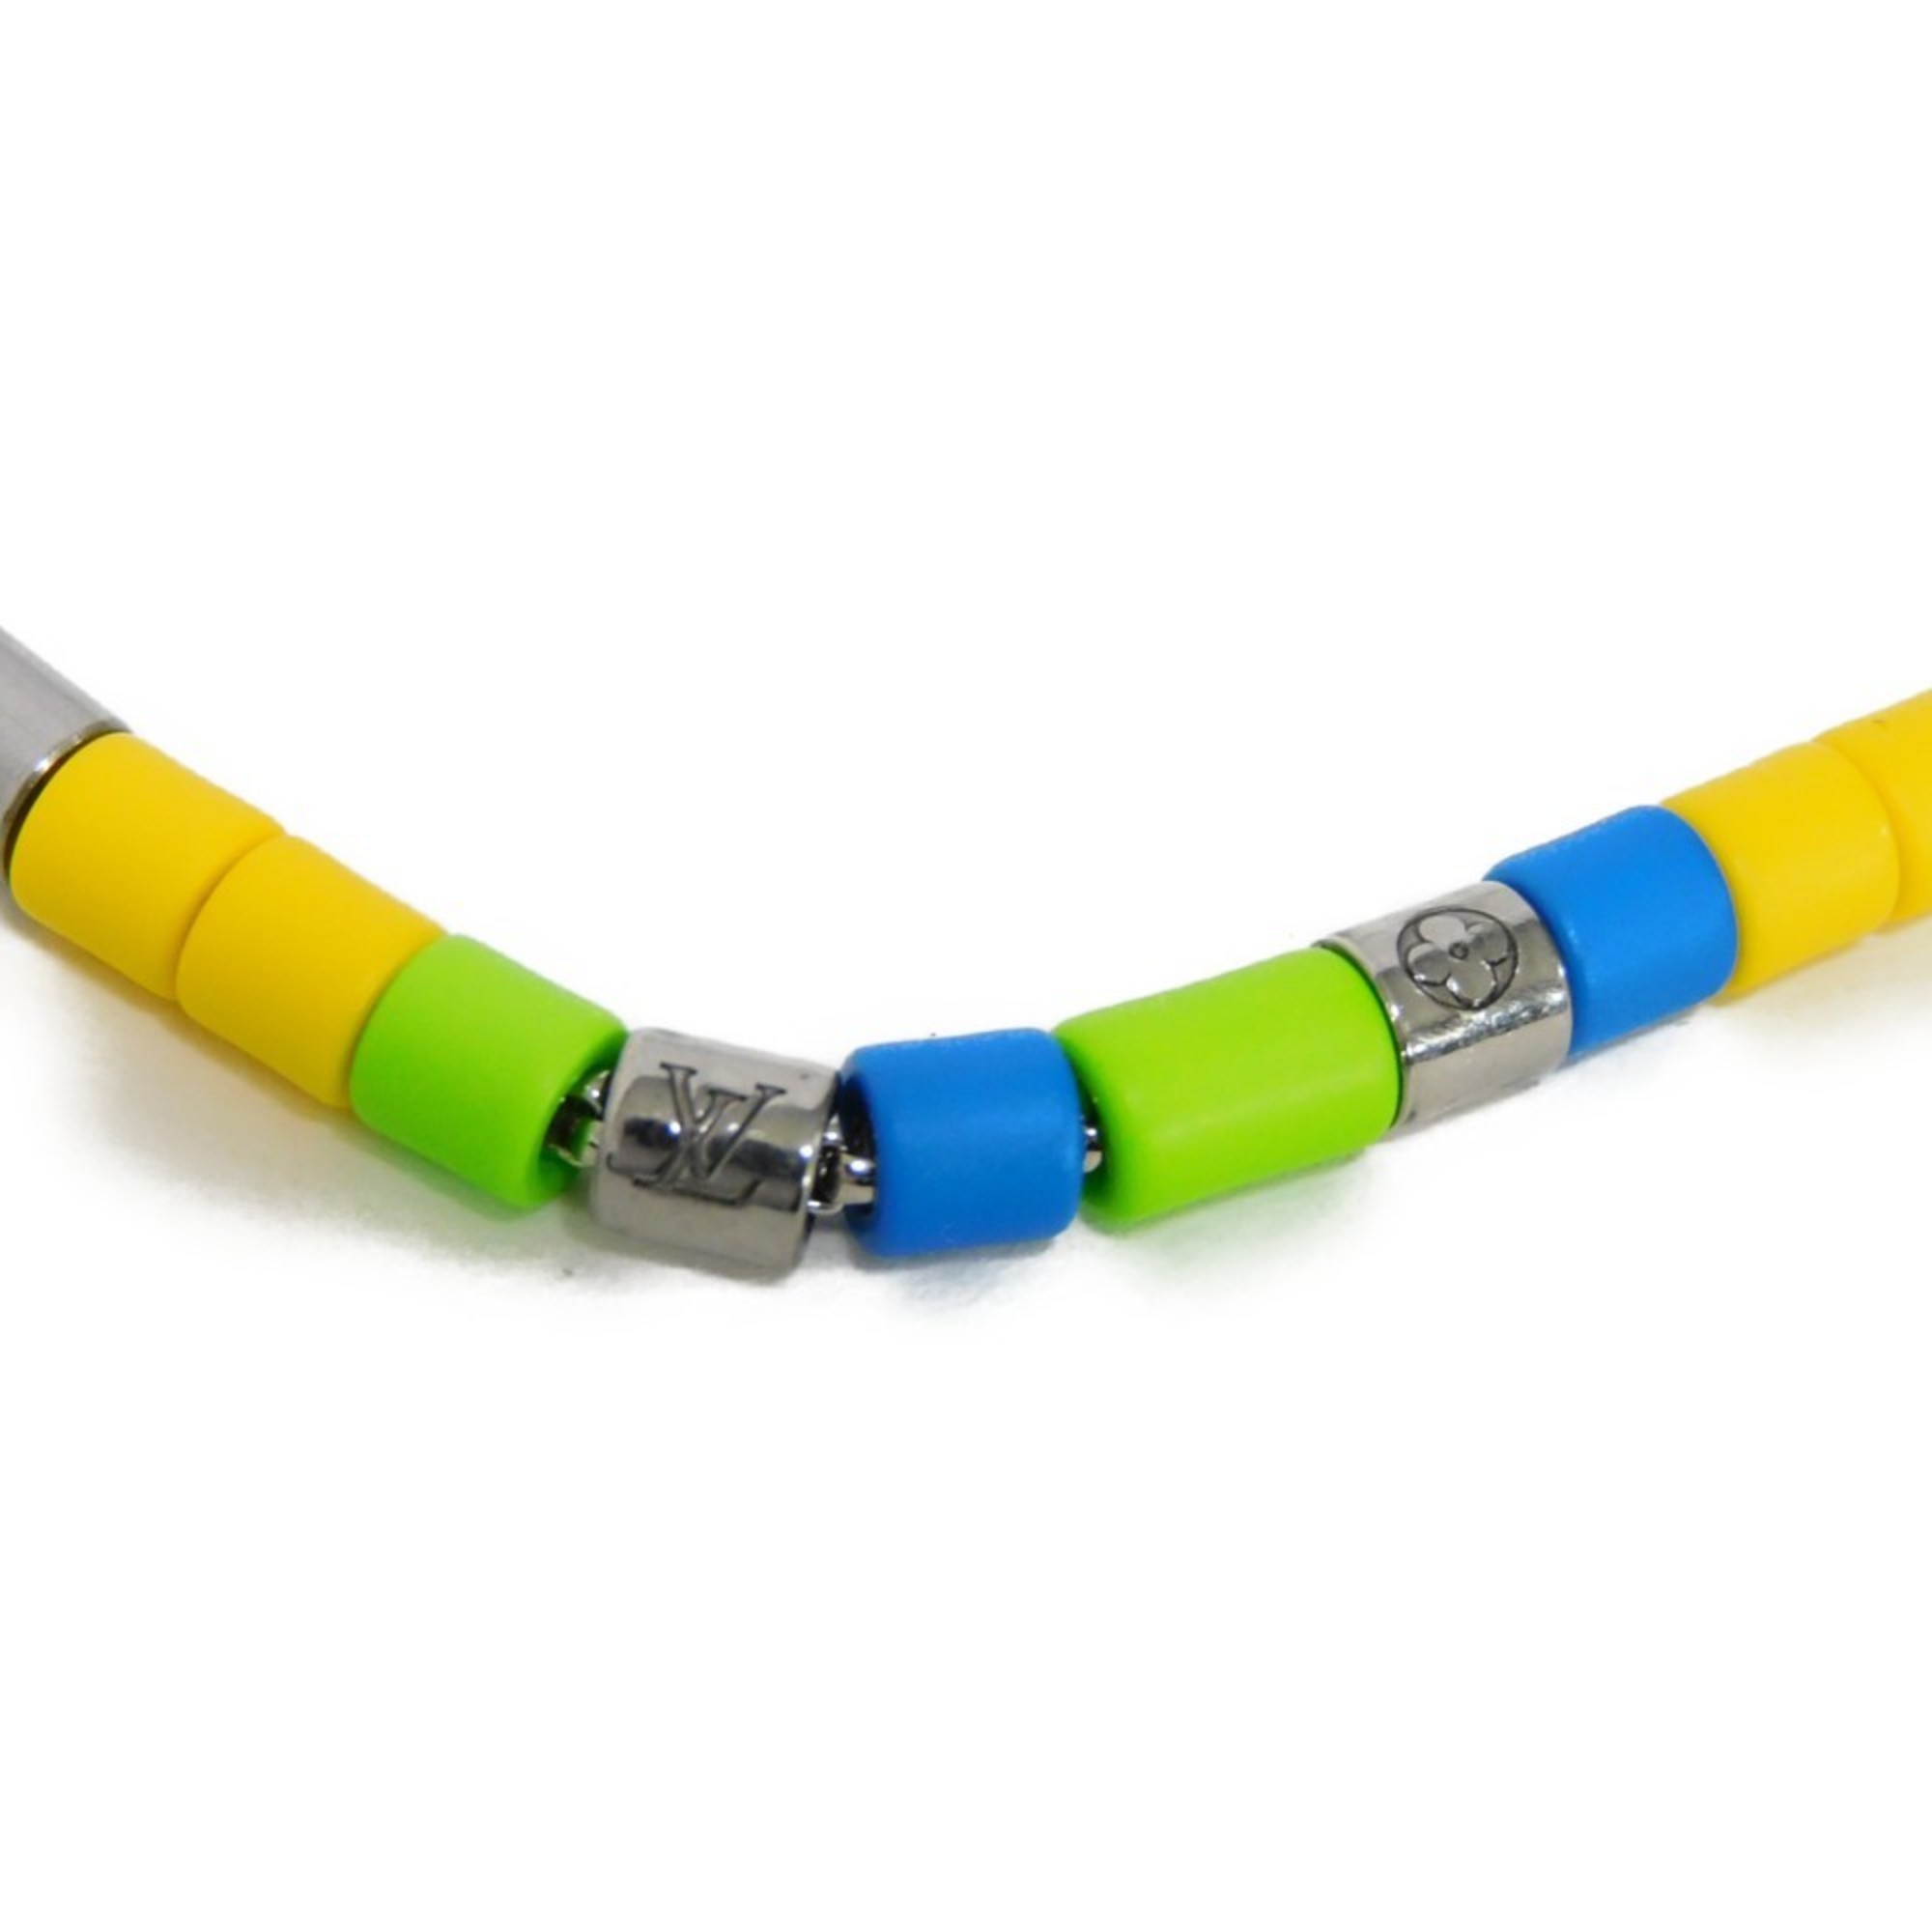 LOUIS VUITTON Bracelet LV Sunrise Signature Beads Monogram Logo Resin Multicolor M00653 Men's Accessories Jewelry